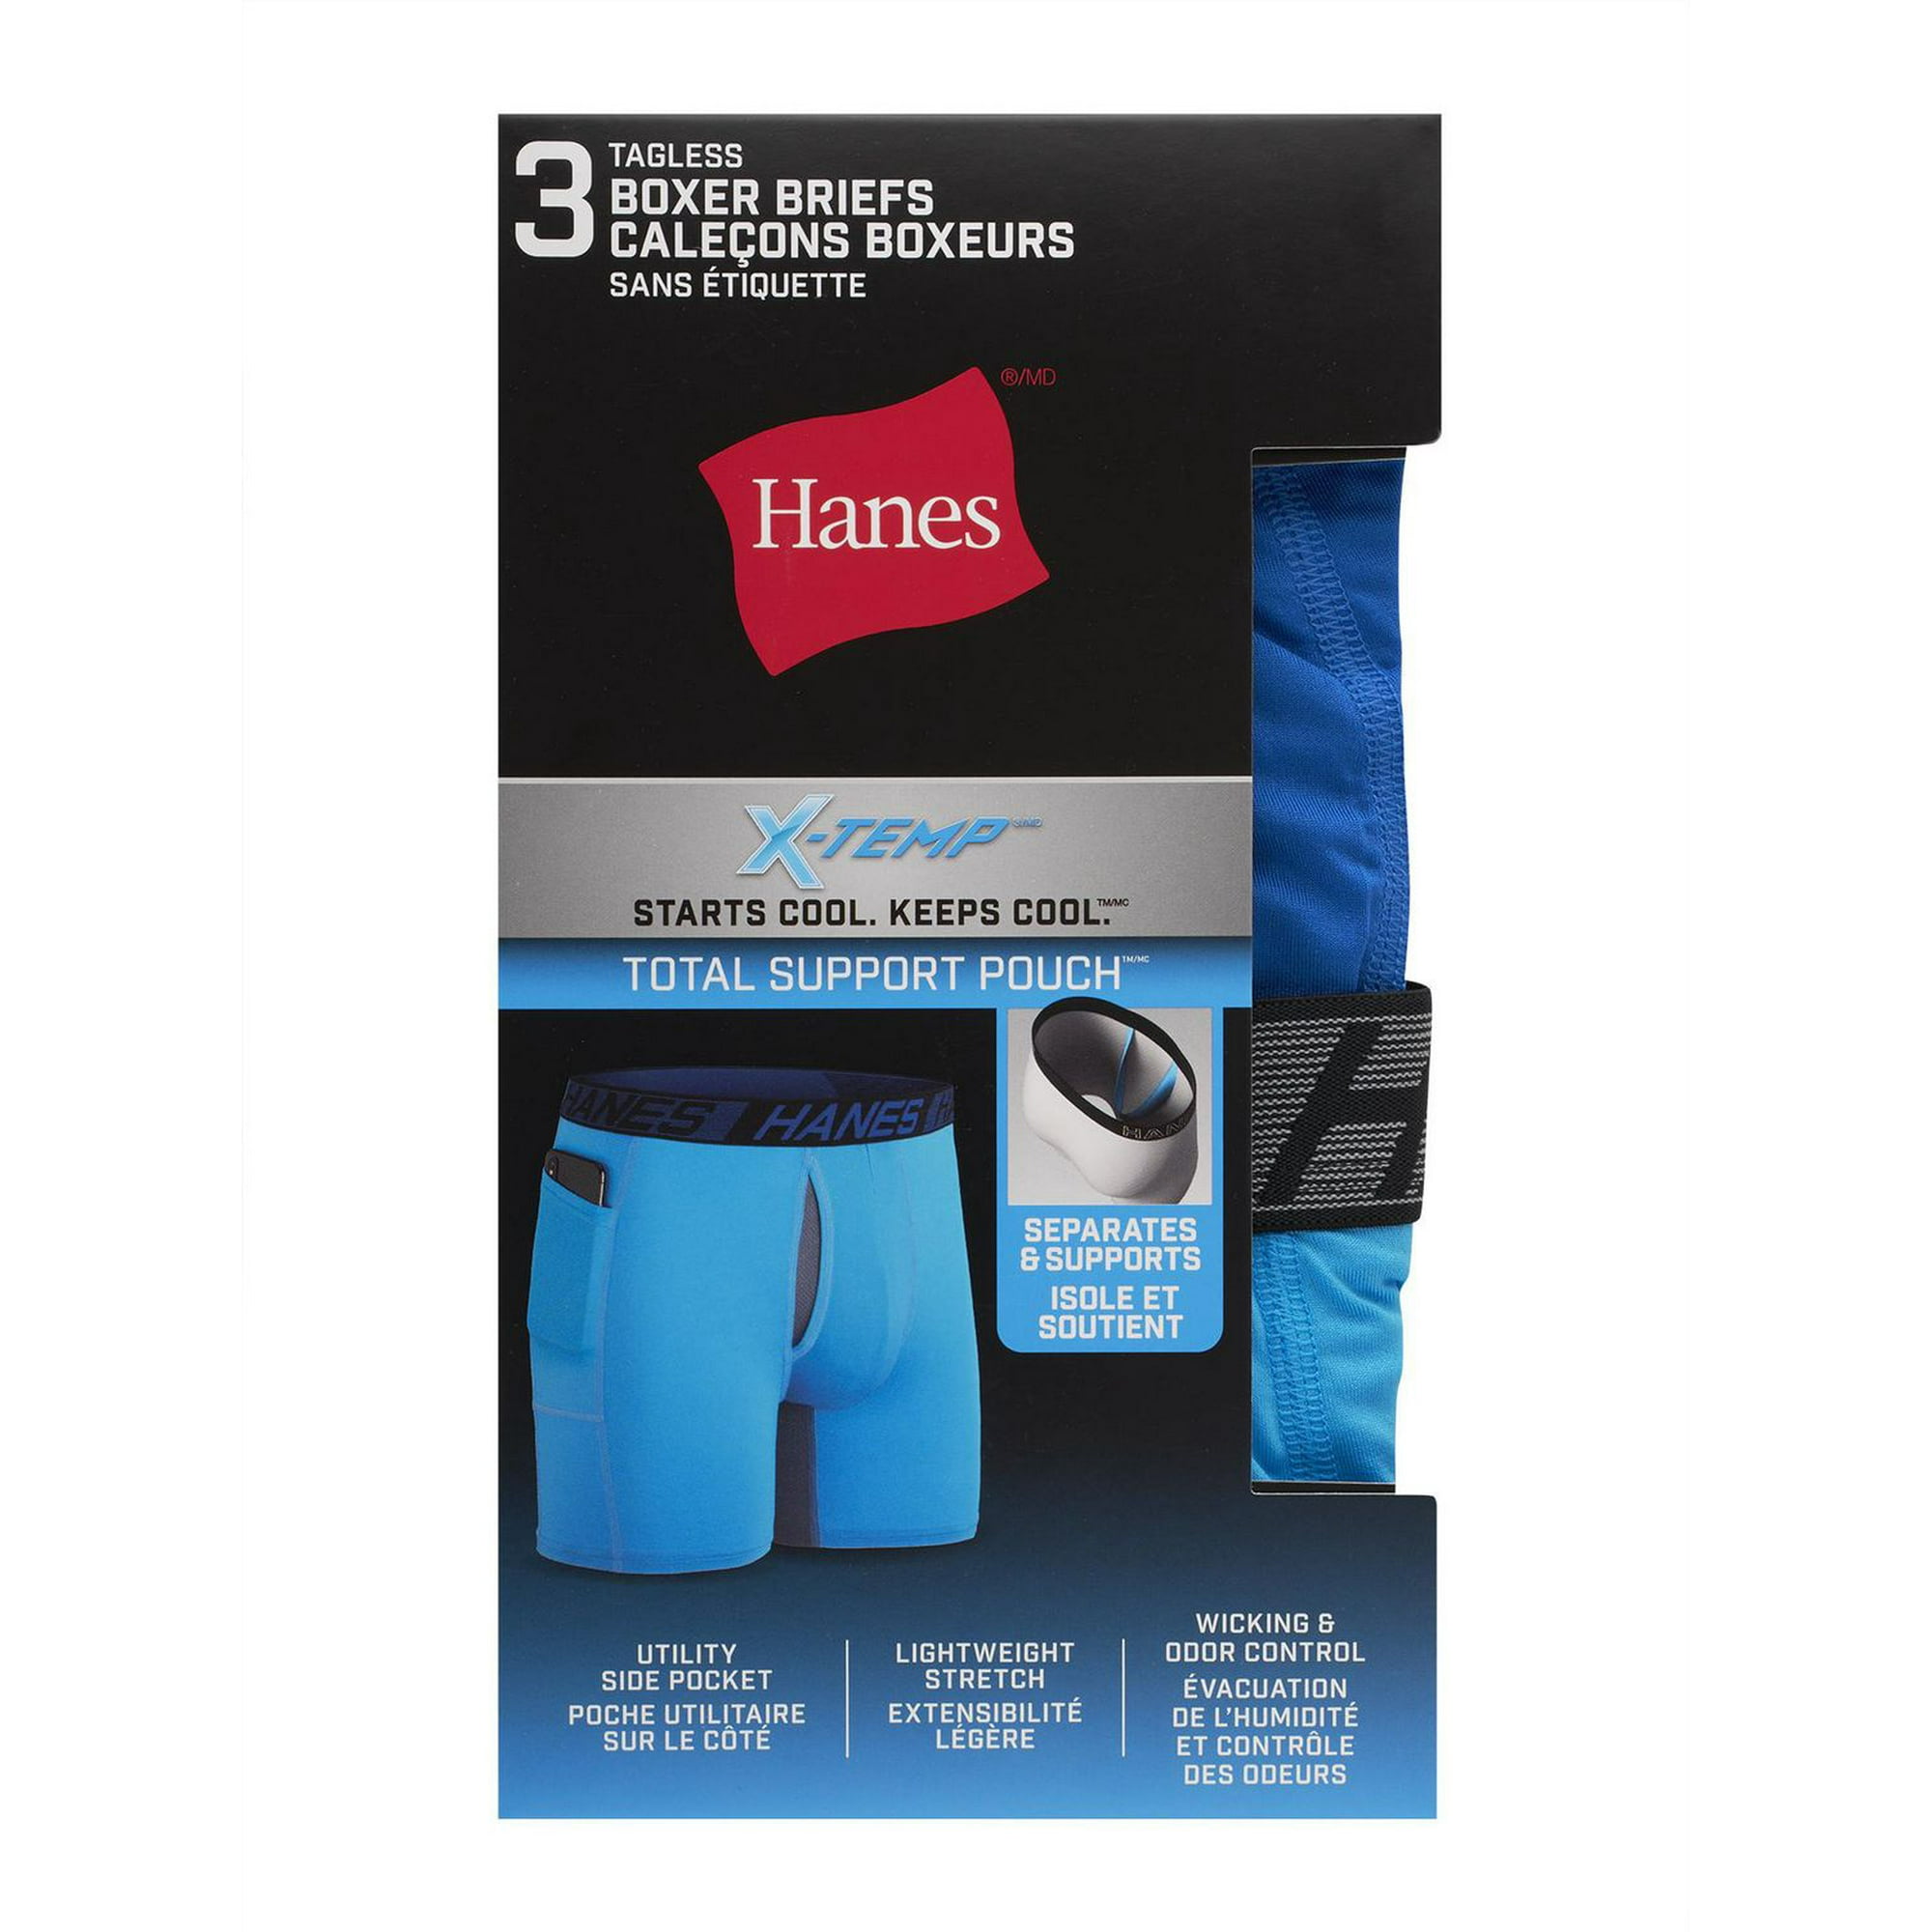 Comfortable Innerwear for Men - Boxer briefs